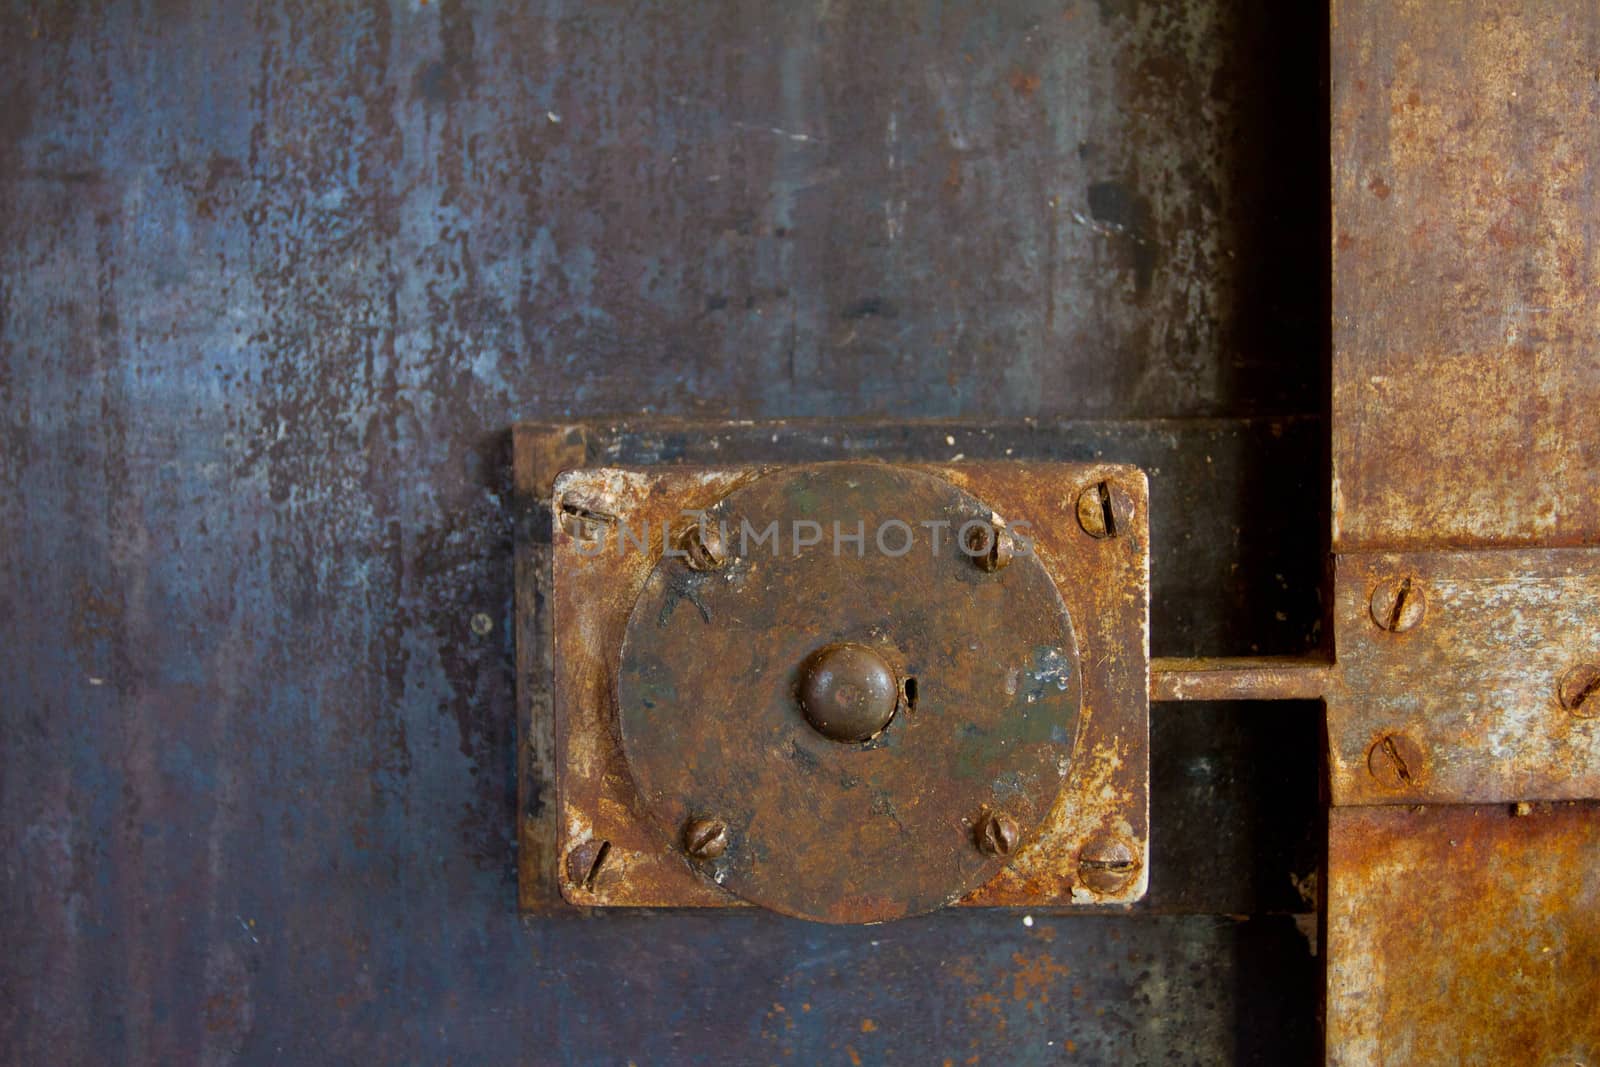 A door handle lock detail on an old building in the doorway to a restaurant.